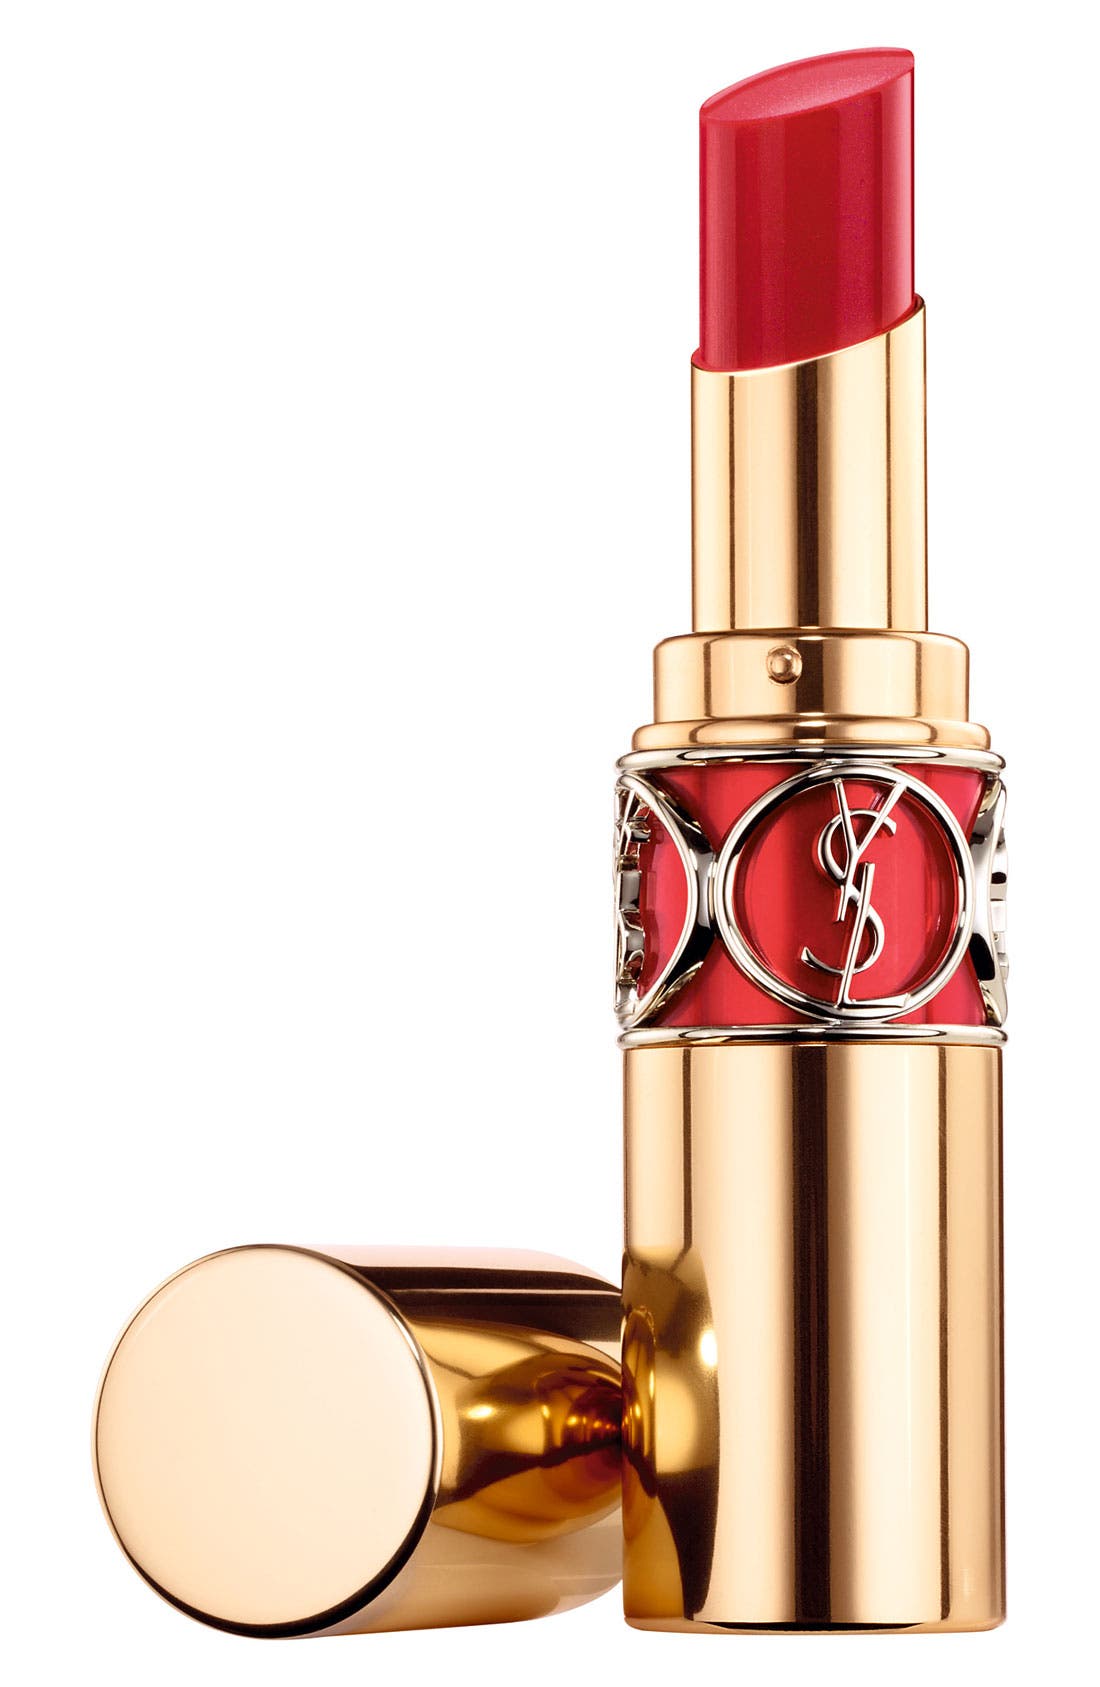 Yves Saint Laurent Rouge Volupte Shine Oil-in-Stick Lipstick Balm in 04 Rouge Ballet